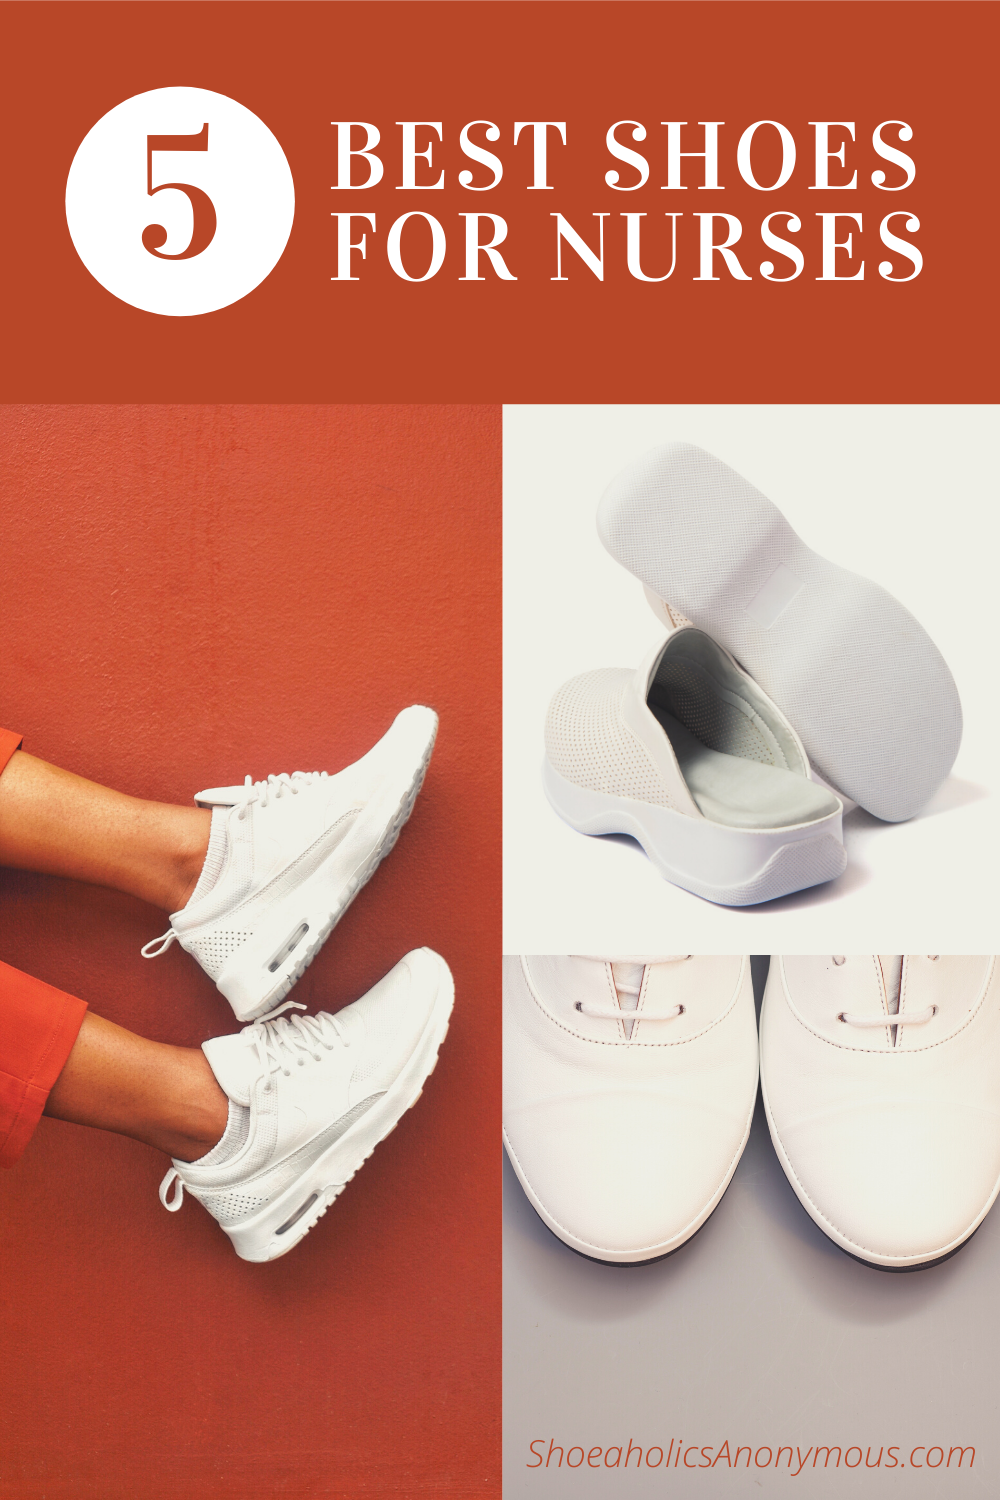 The 5 Best Shoes for Nurses